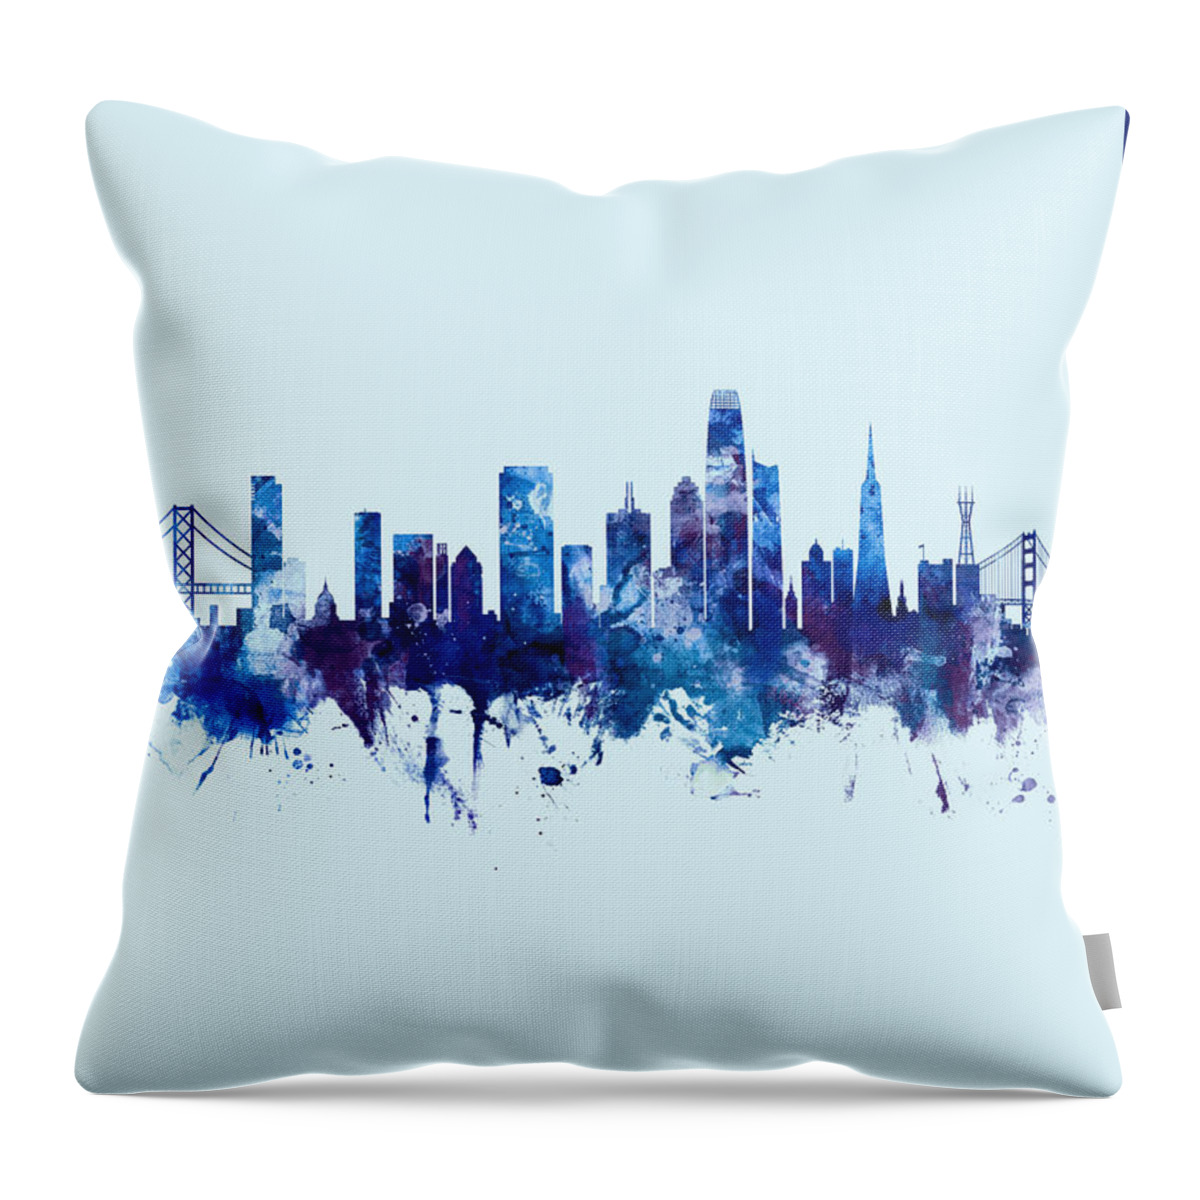 San Francisco Throw Pillow featuring the digital art San Francisco California Skyline #20 by Michael Tompsett